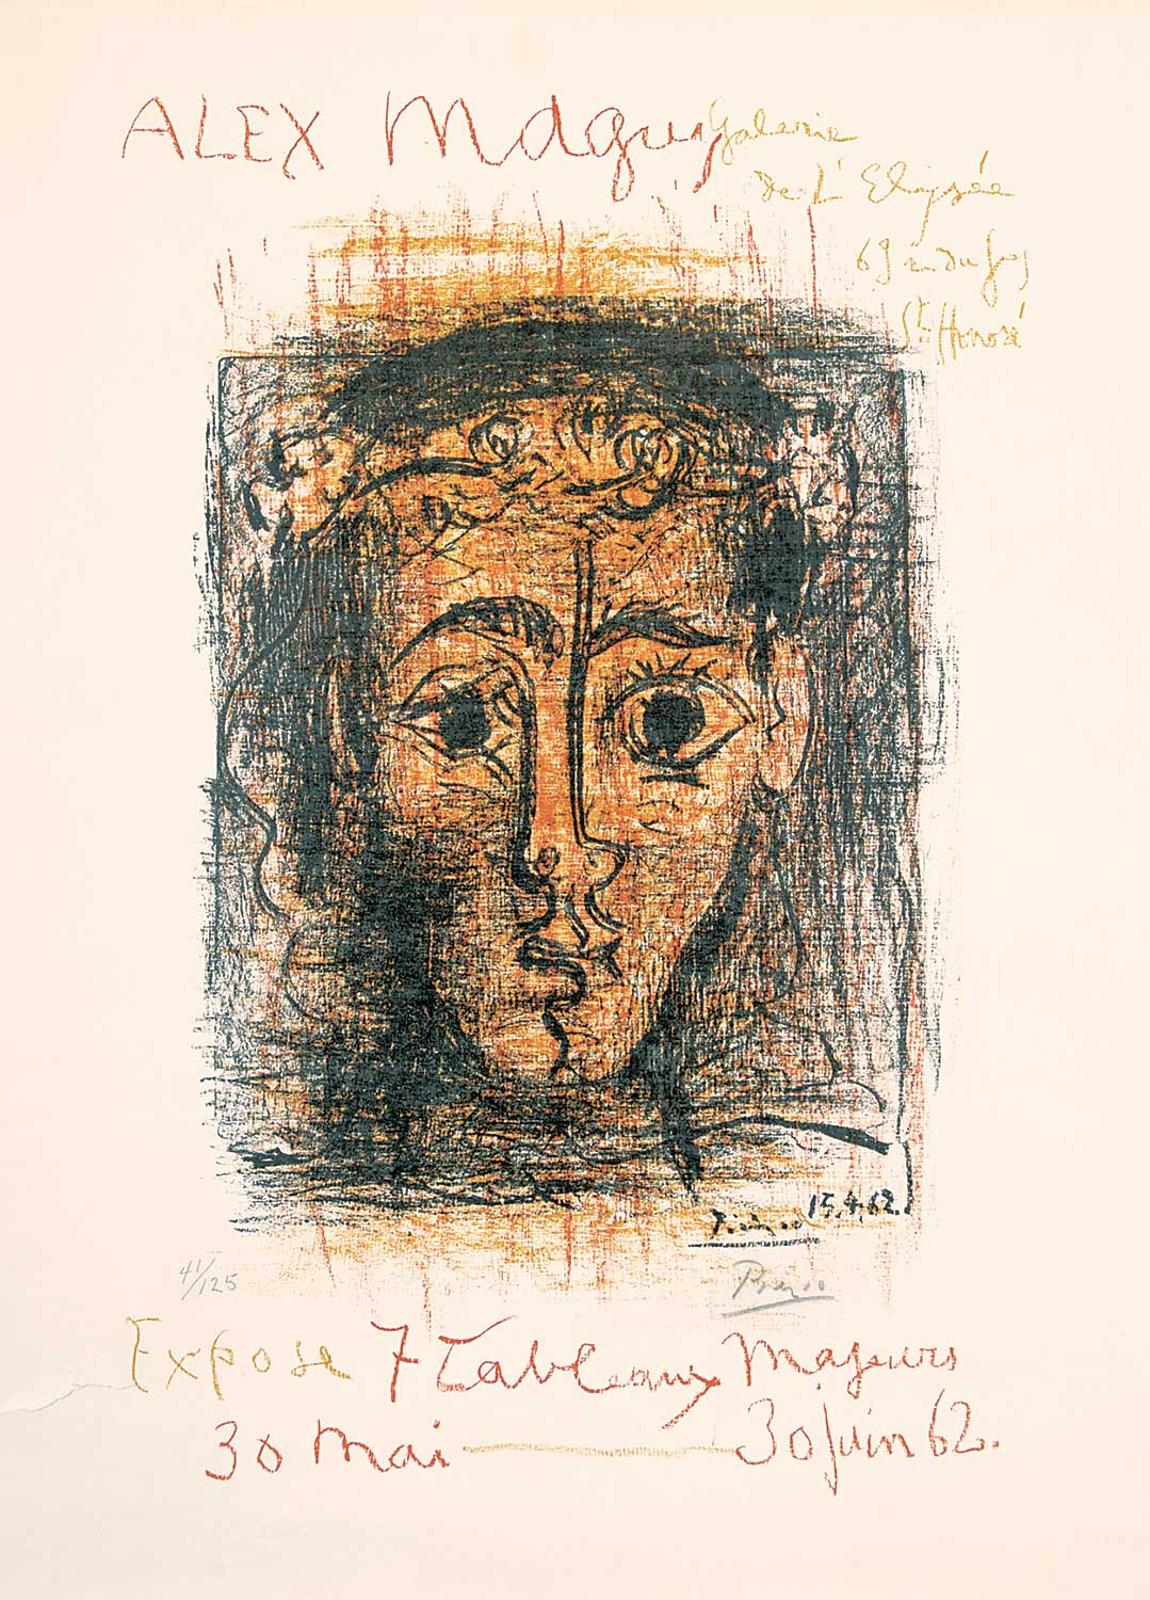 Pablo Ruiz Picasso (1881-1973) - Poster for Alex Maguy Gallery 1962 Exhibition  #41/125